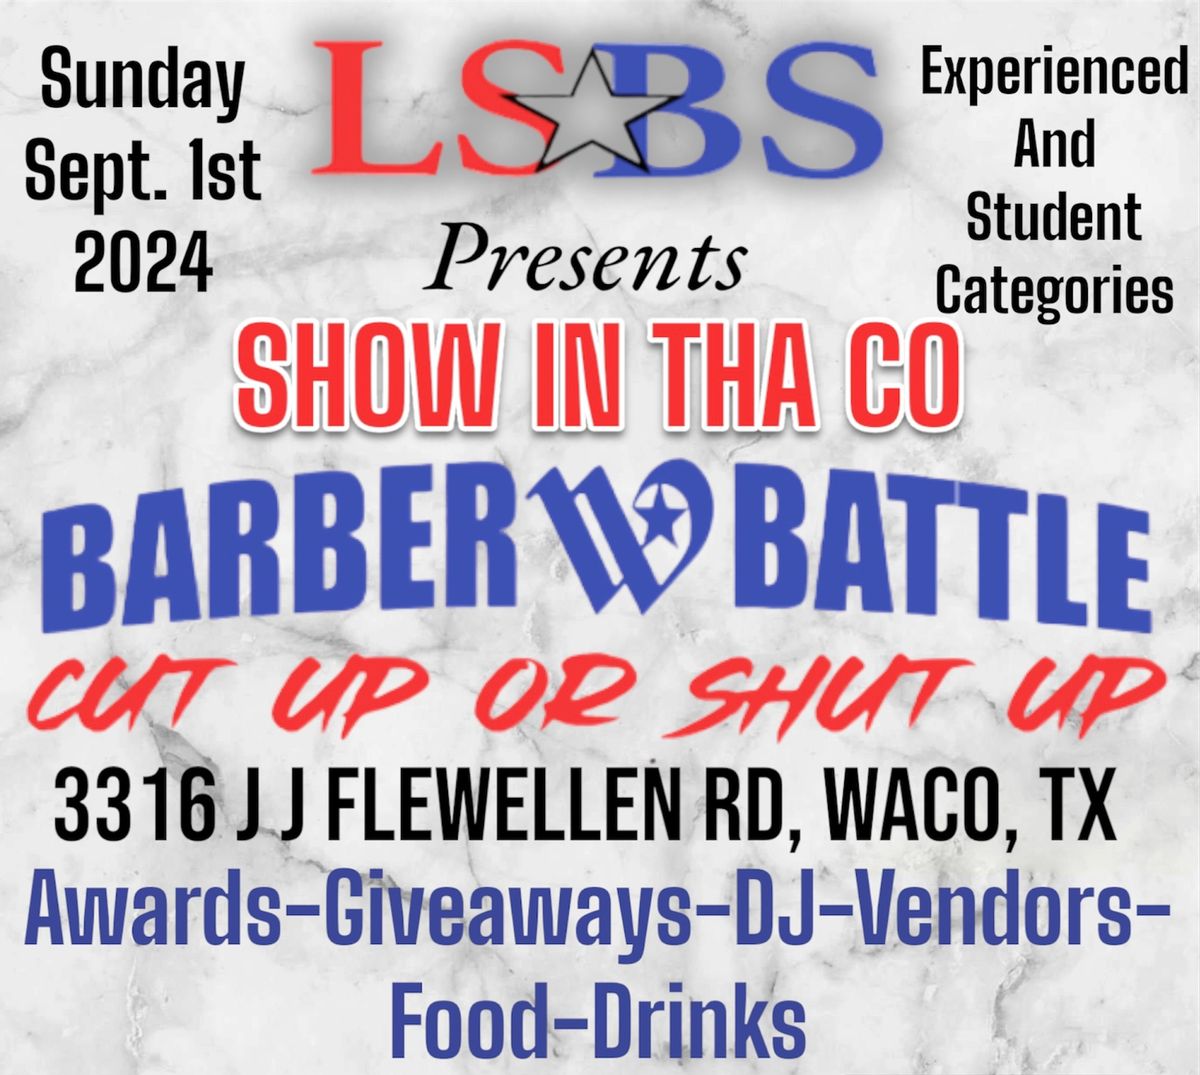 LSBS Waco Barber Battle